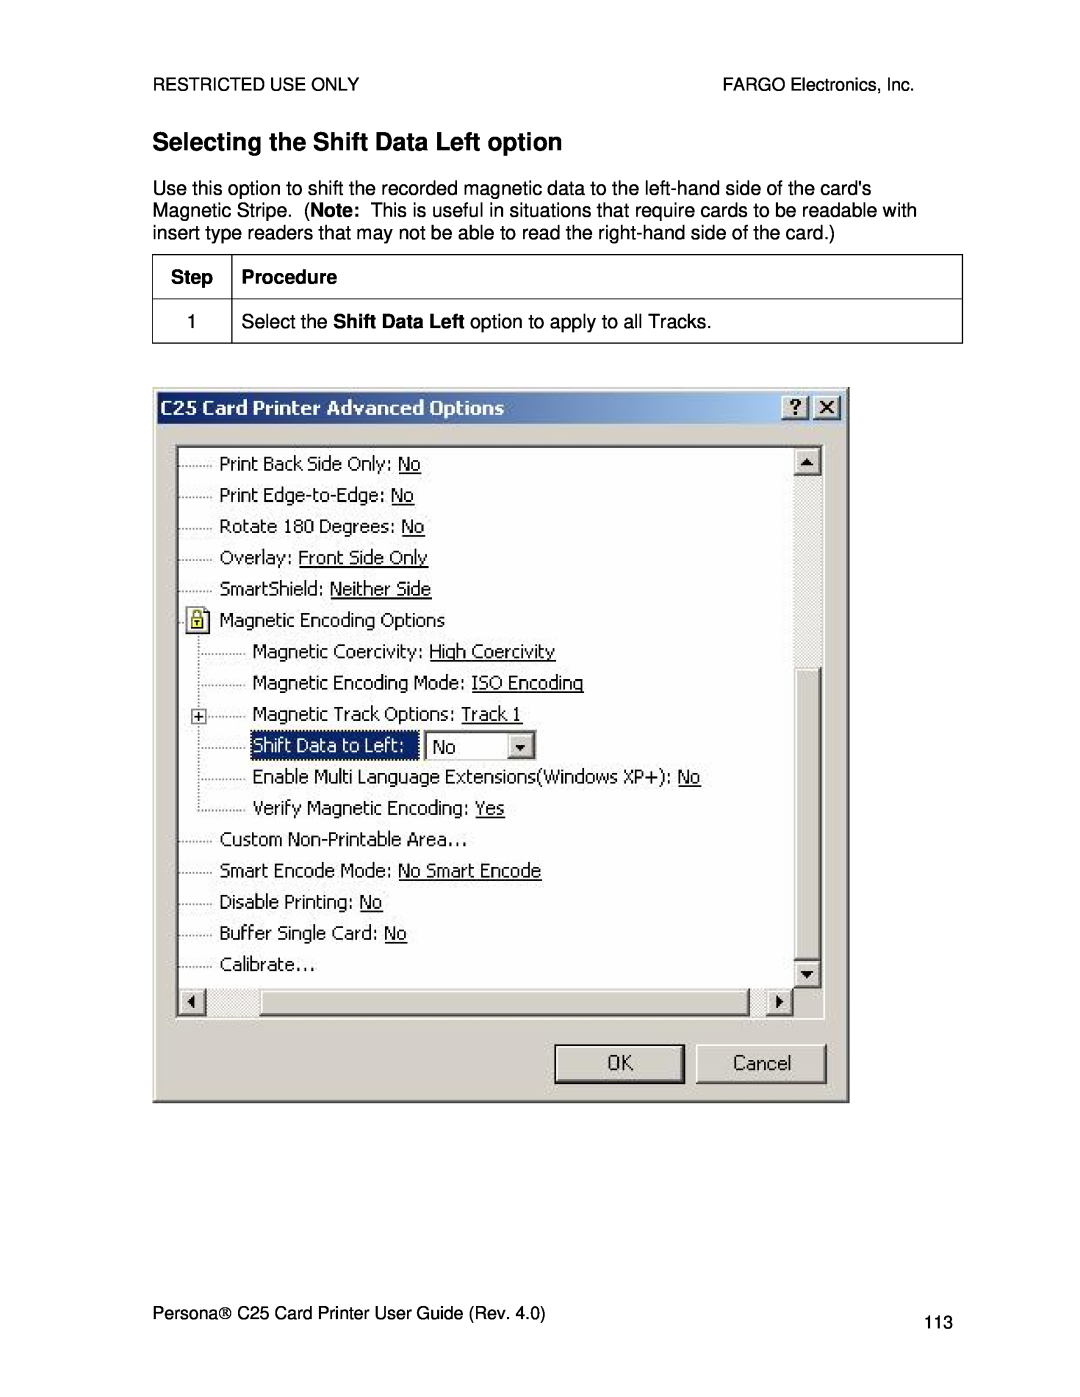 FARGO electronic S000256 manual Selecting the Shift Data Left option 